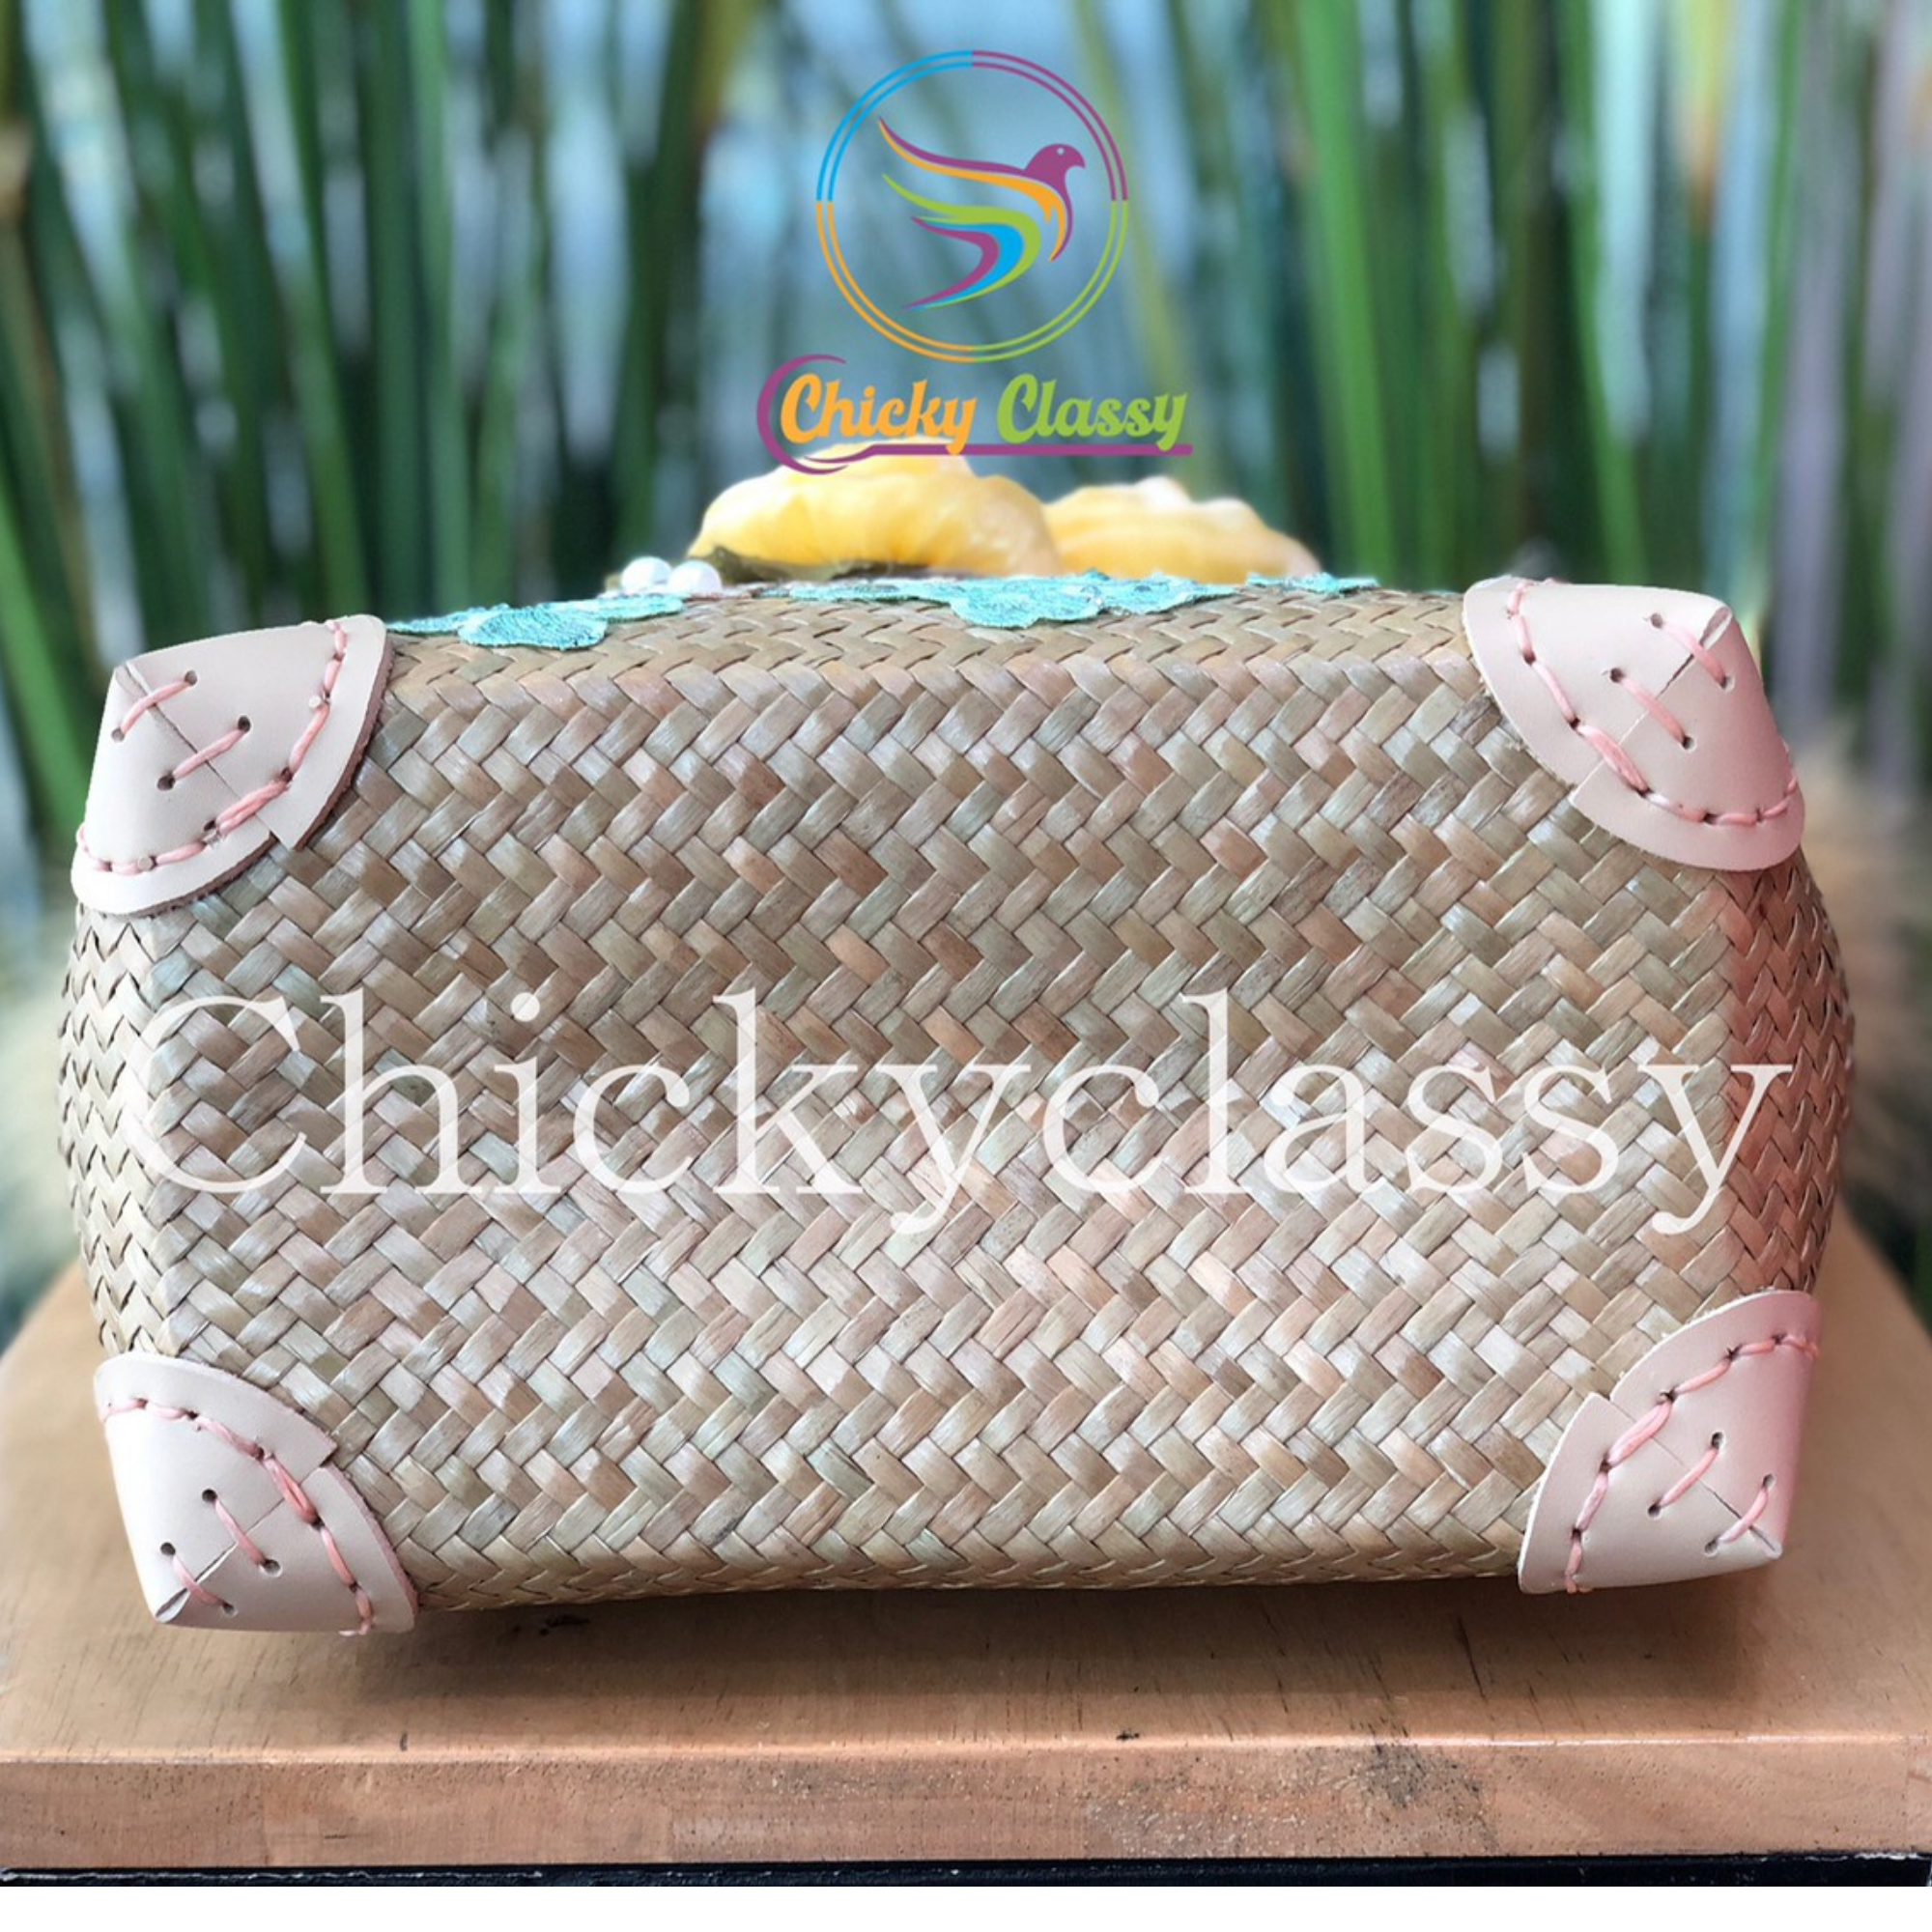 Chicky Classy Home made straw small elegant bag